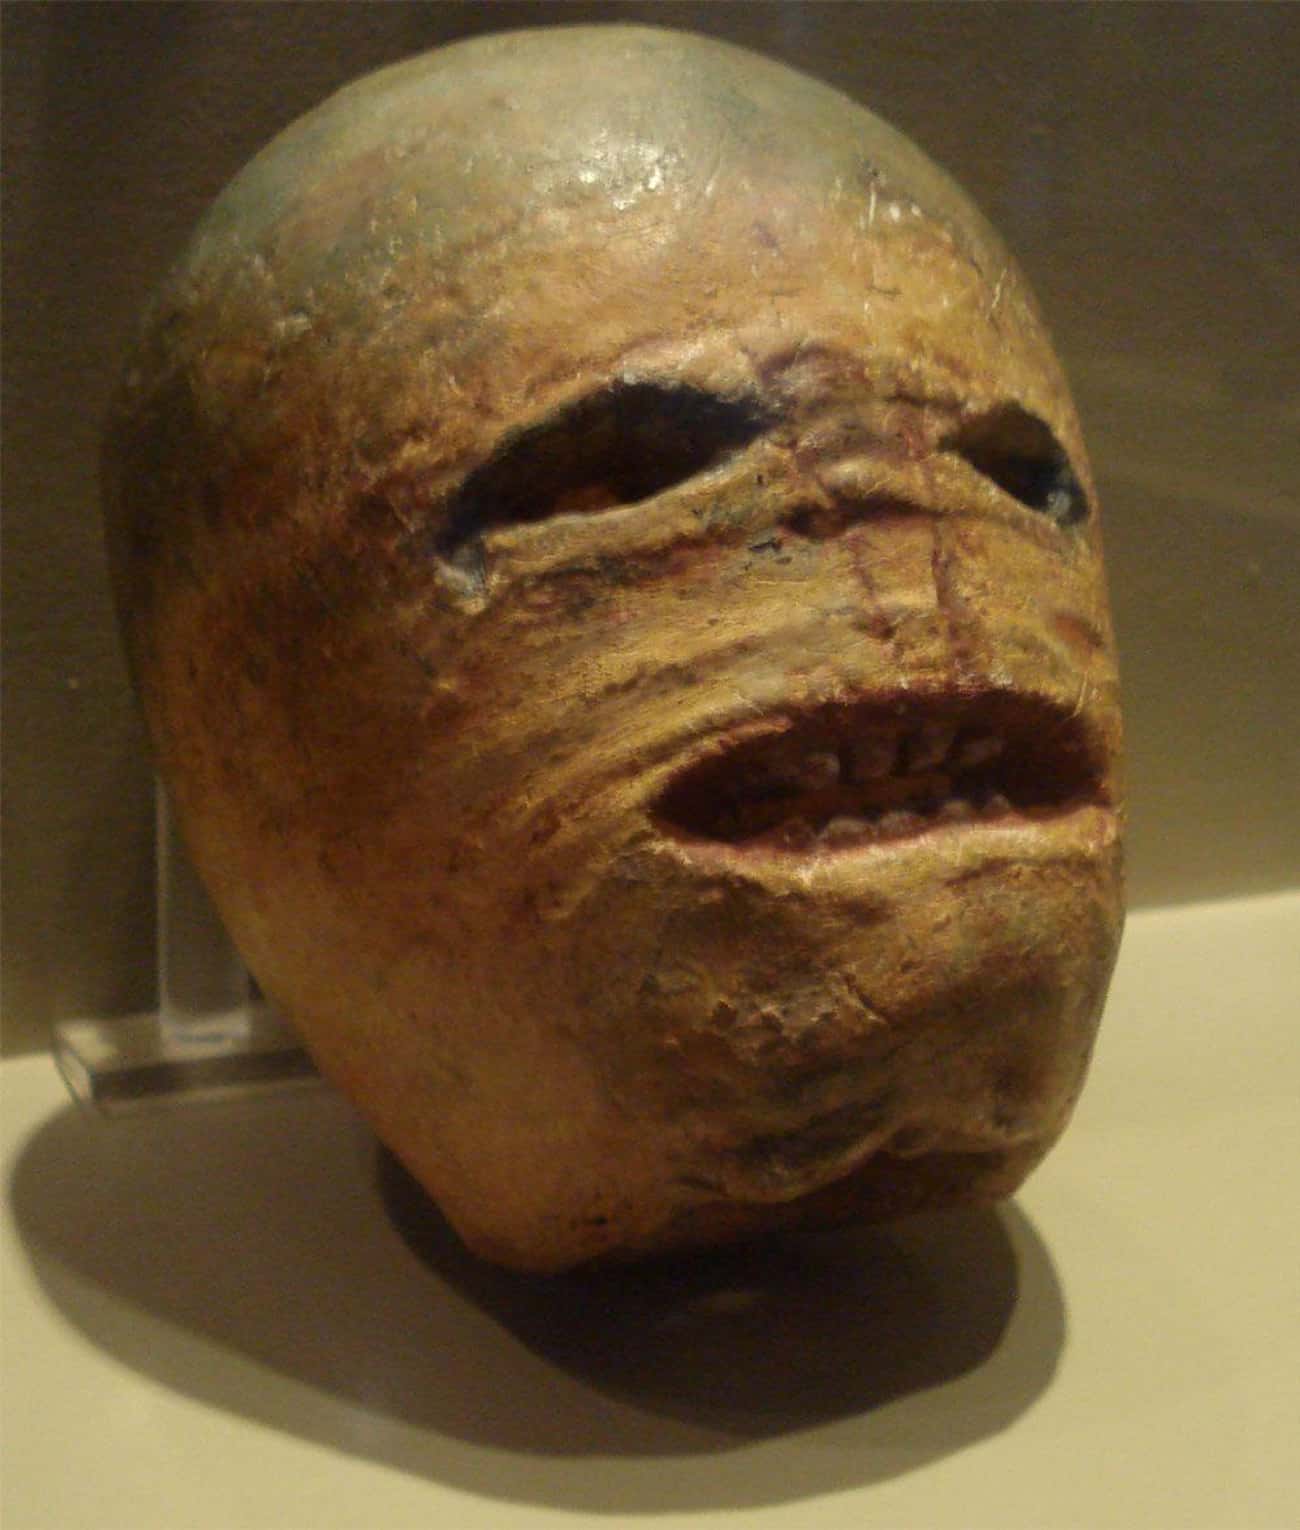 Jack-O'-Lanterns Were Originally Carved From Turnips